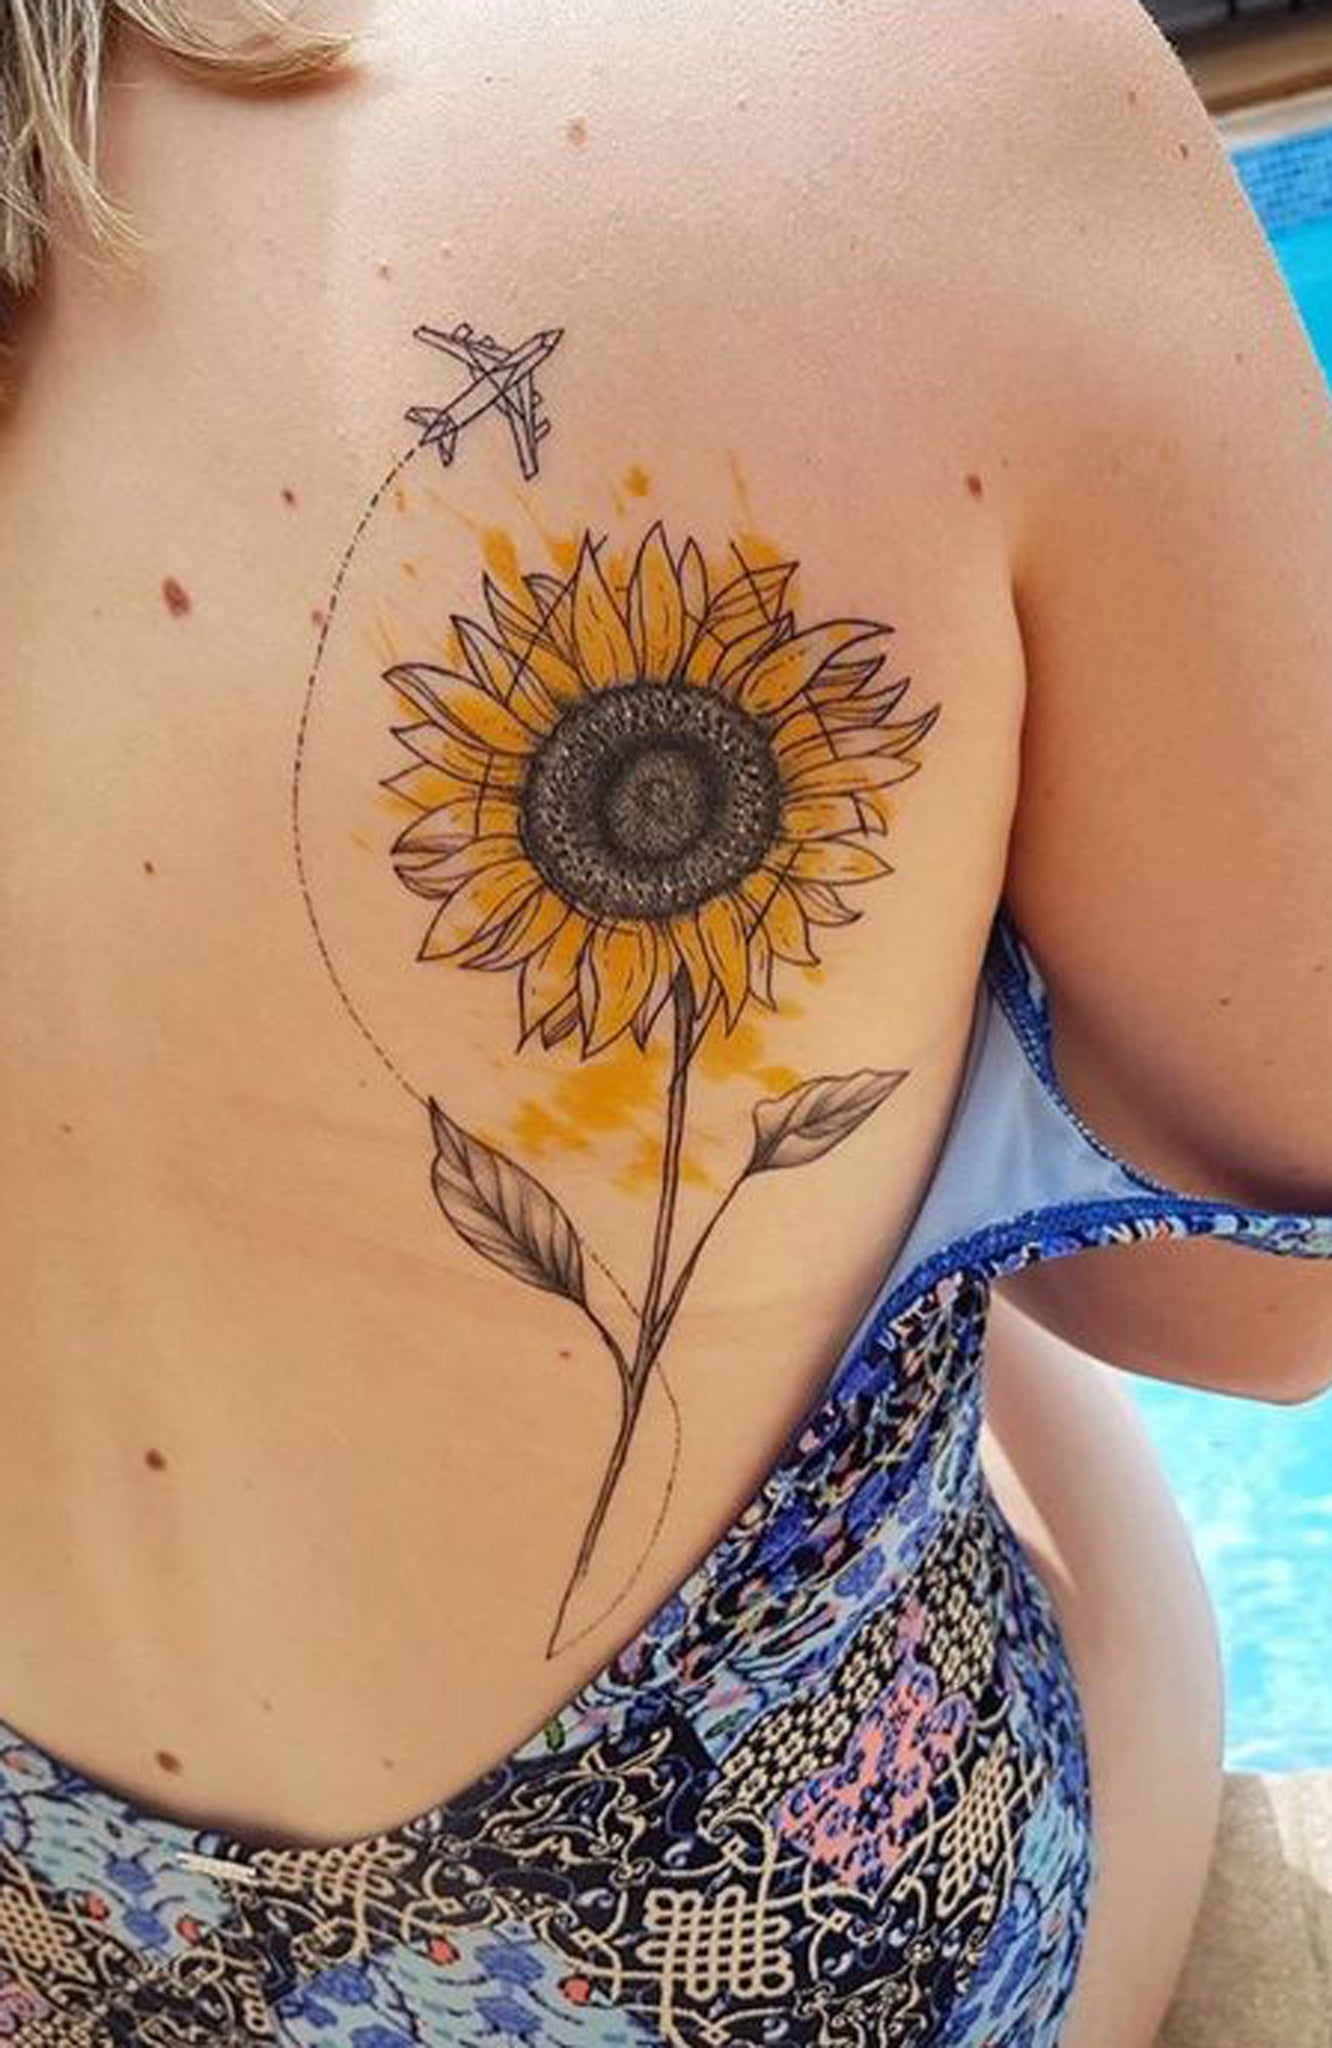 Realistic Sunflower Back Tattoo Ideas for Women - Unique Cool Flower Shoulder Tat -  Ideas de tatuaje de girasol realistas para mujeres - www.MyBodiArt.com #tattoos 